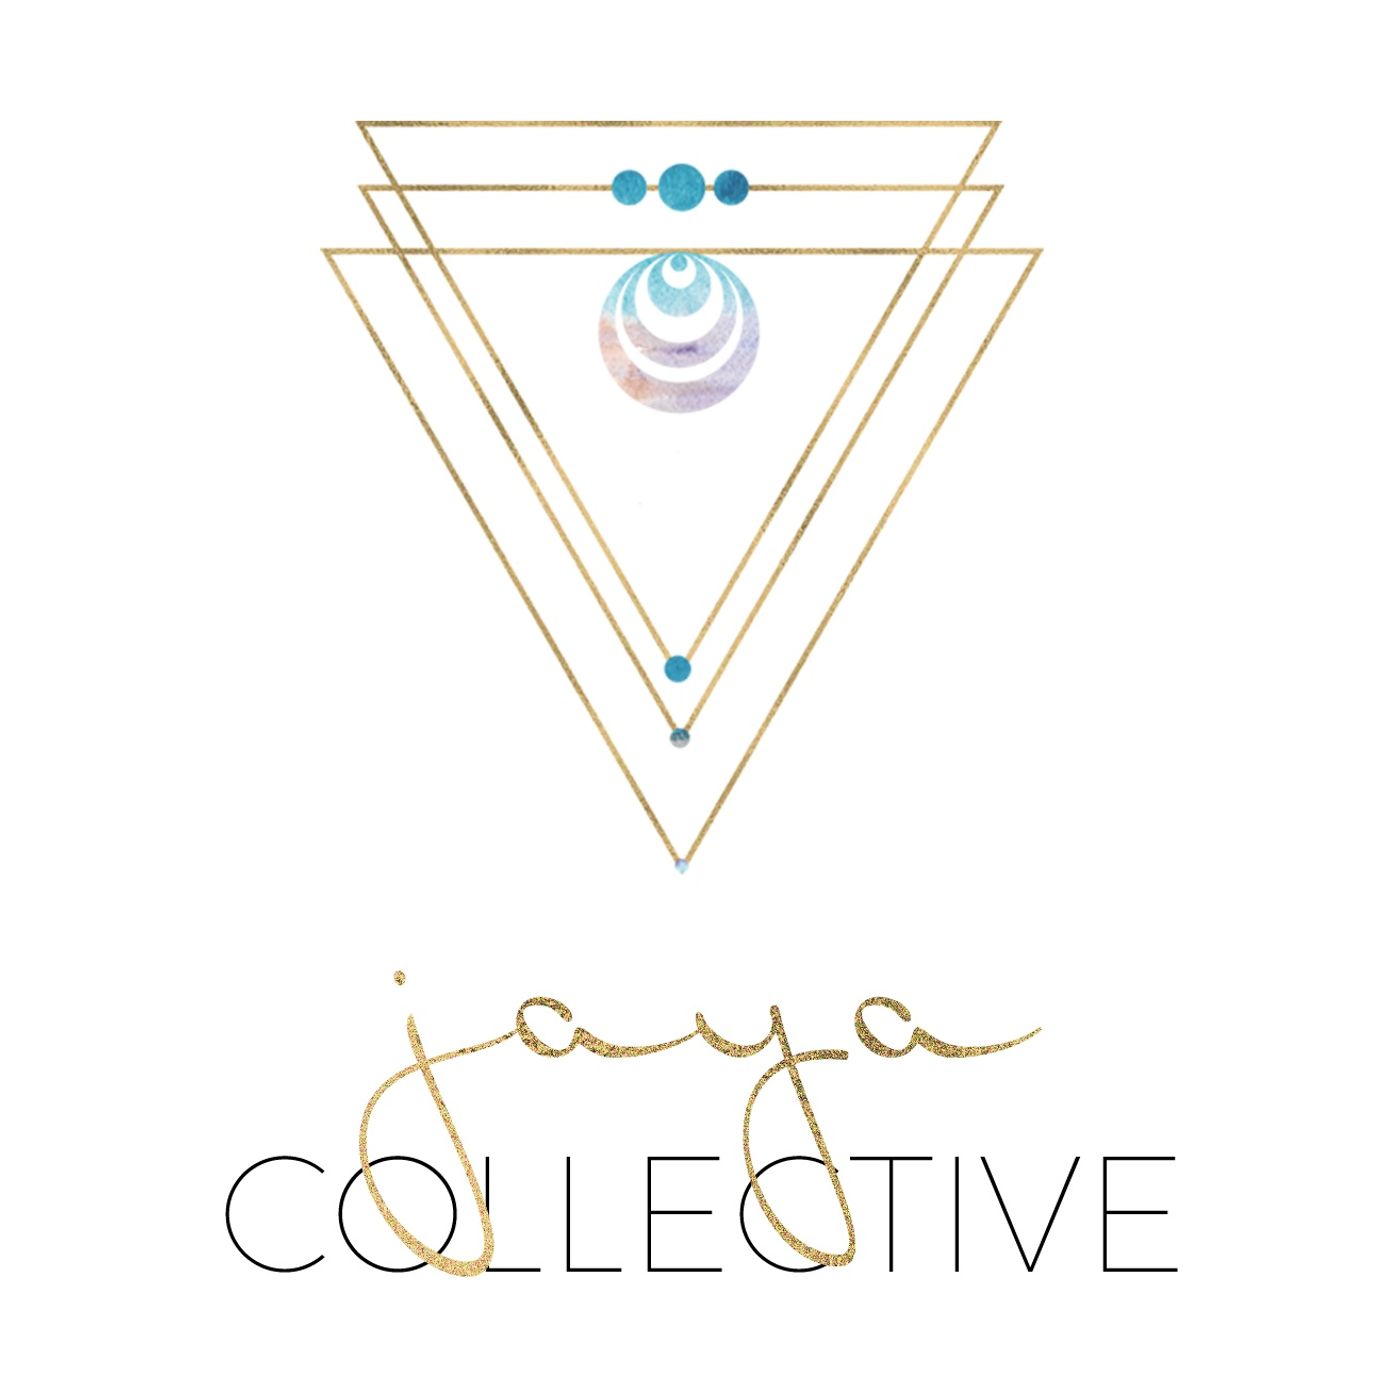 JAYA Collective